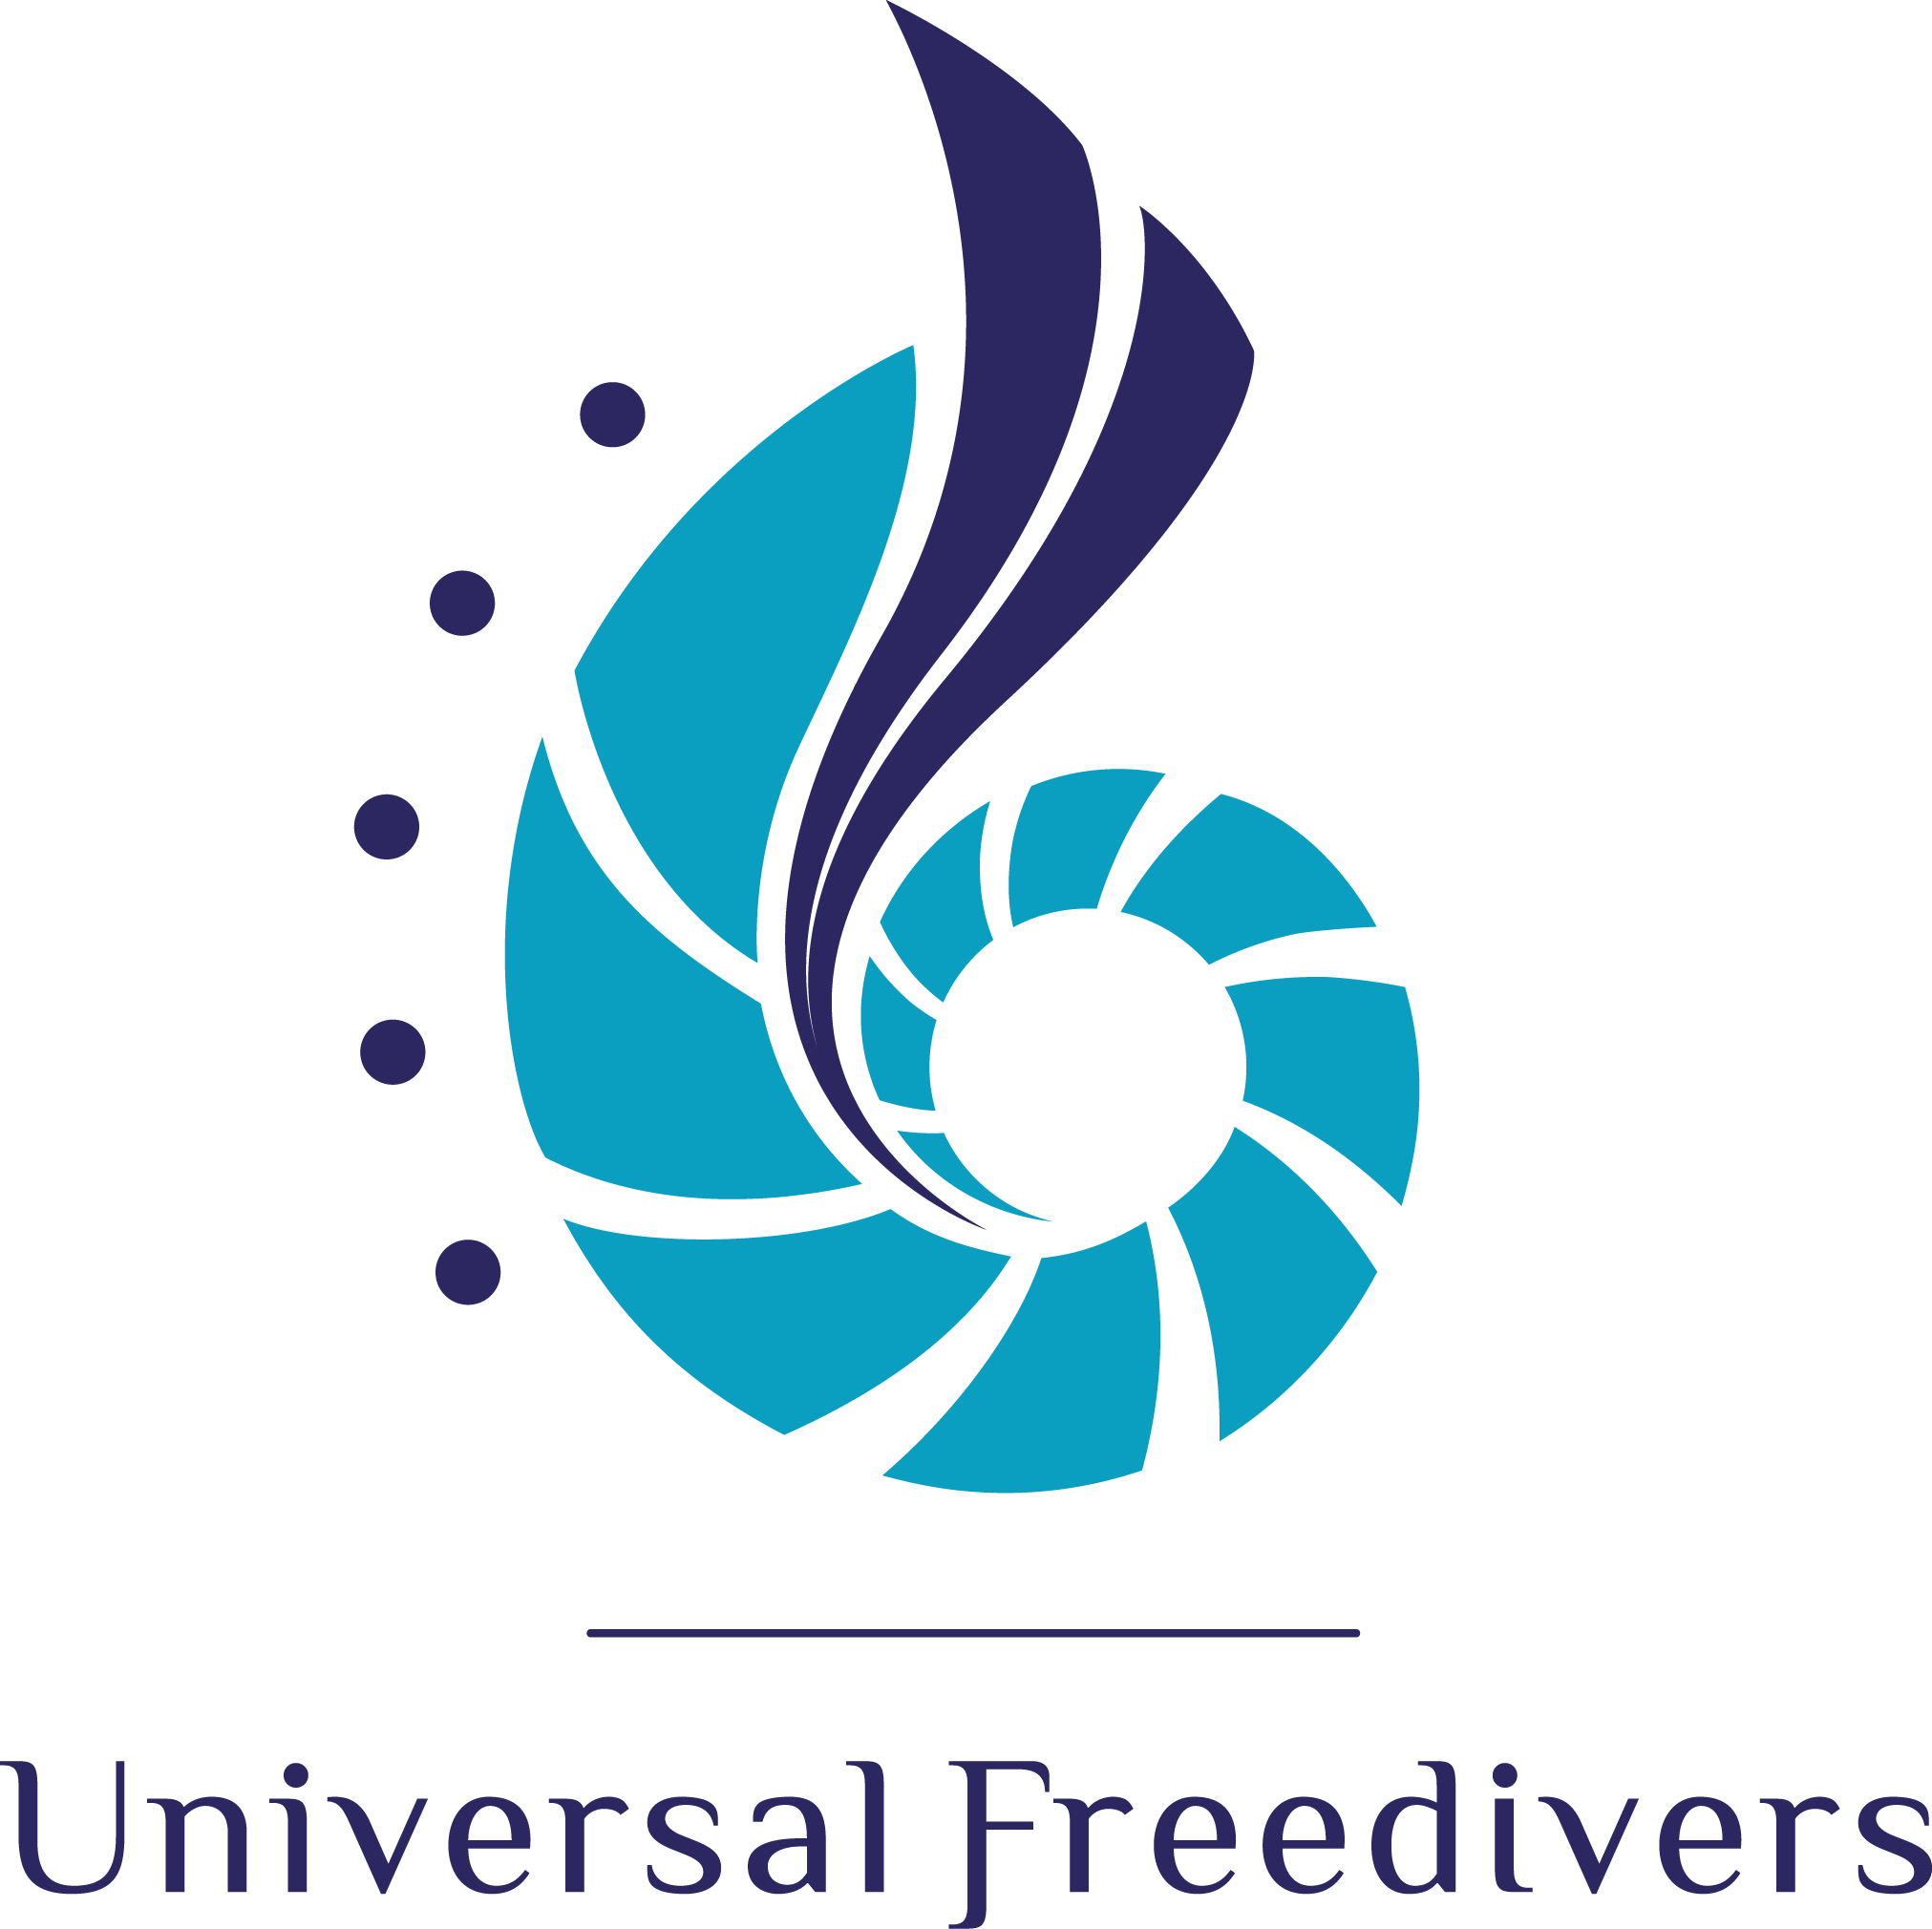 Universal freedivers Ecole Internationale d'Apnée